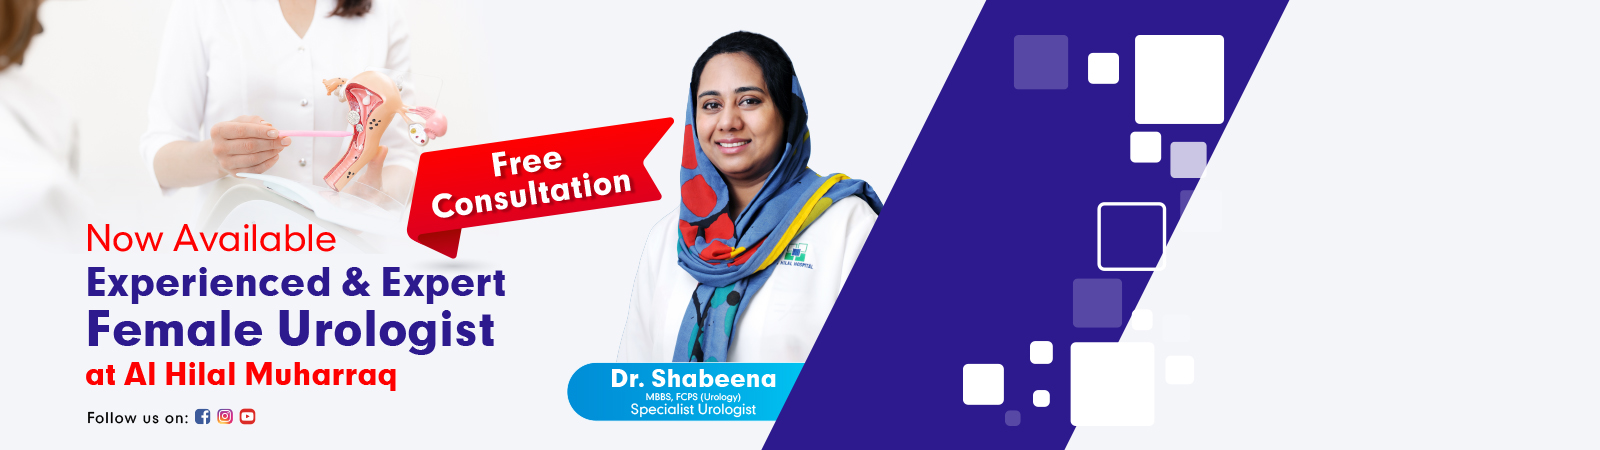 ALH-Website-Banner-D.-Shabeena-Urologist-1600-x-450